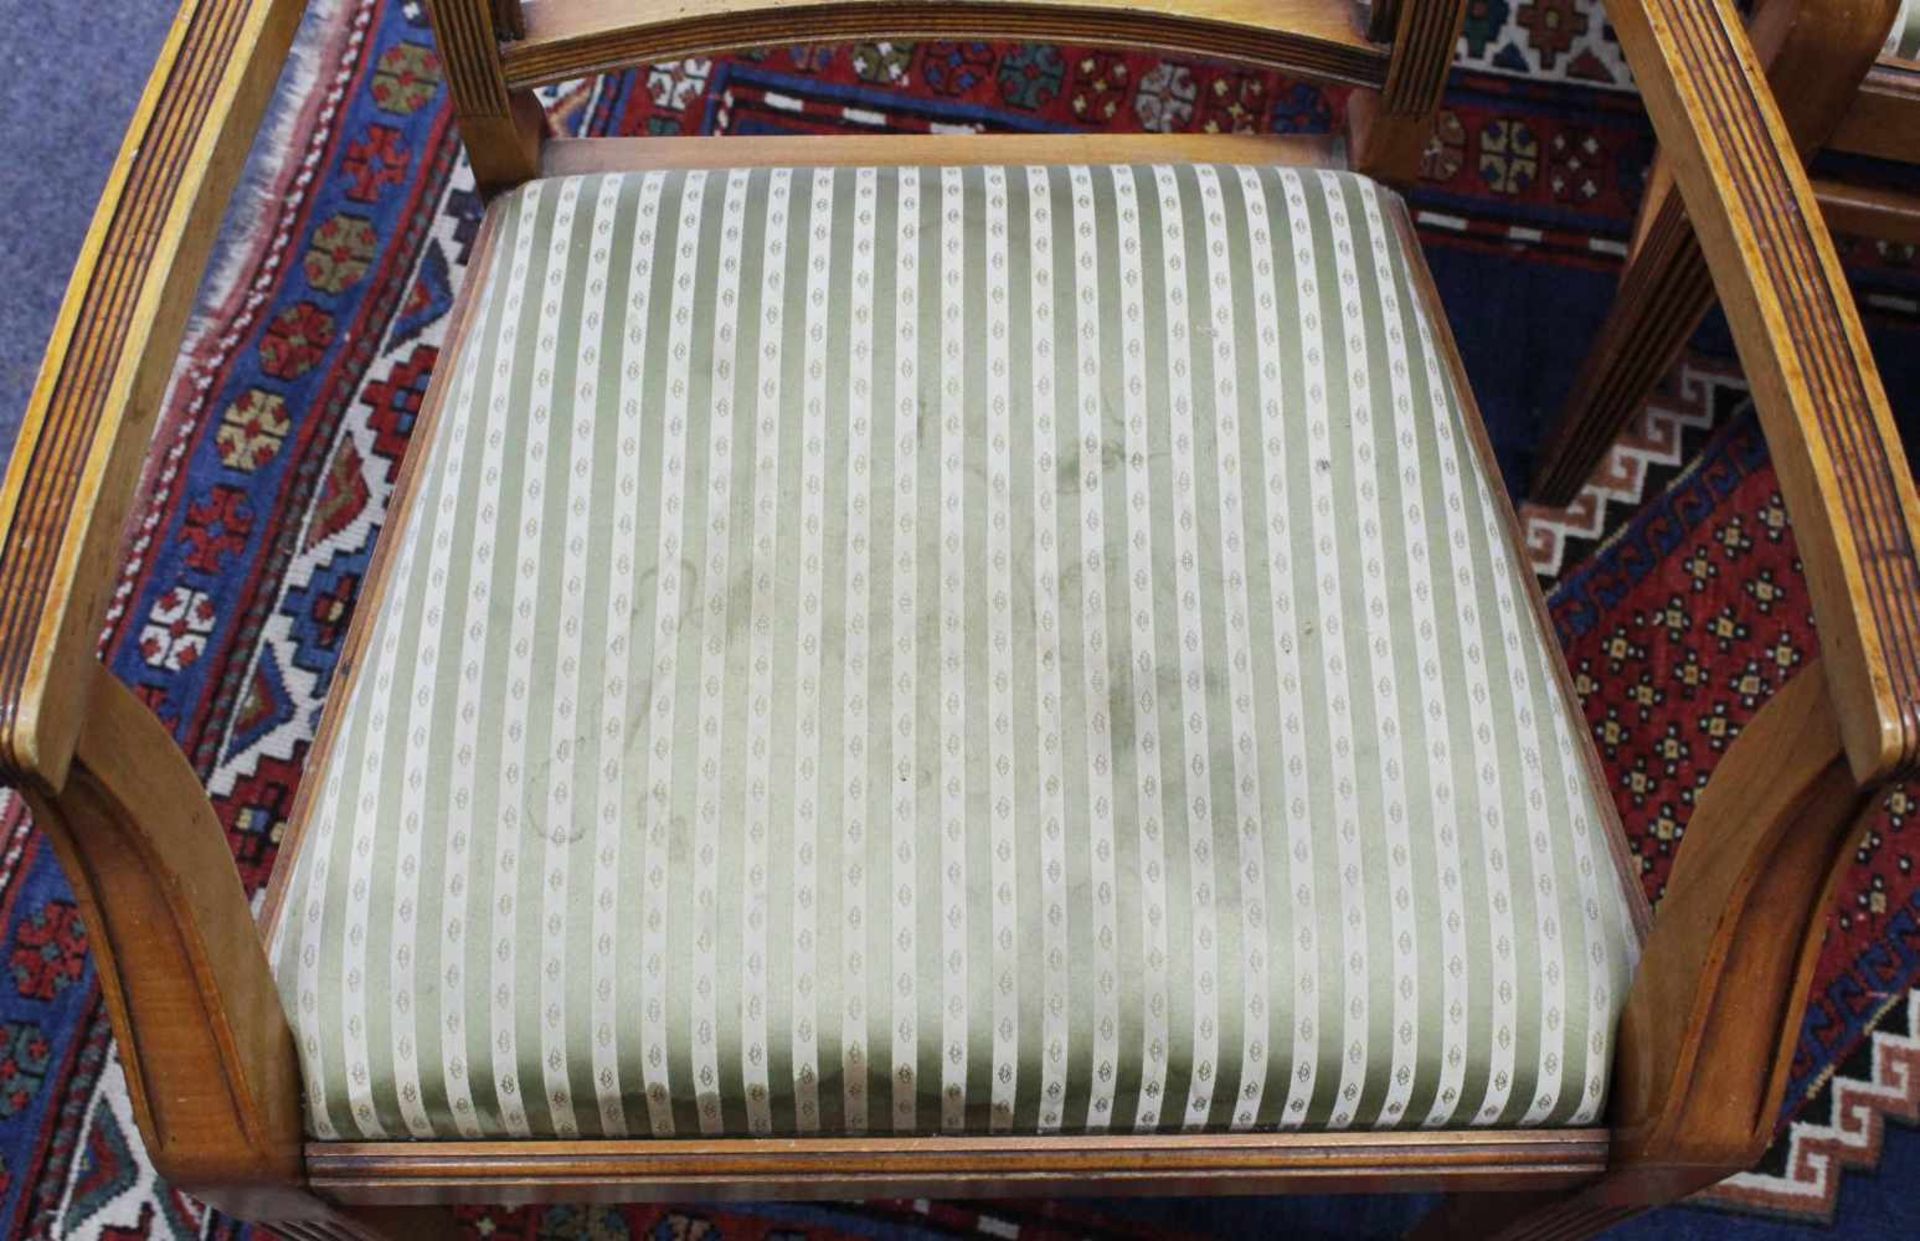 4 Stühle, gestempelt. "Reprodux. Made in England".88 cm x 56 cm x 46 cm. Sitzhöhe 50 cm.4 chairs, - Bild 2 aus 9